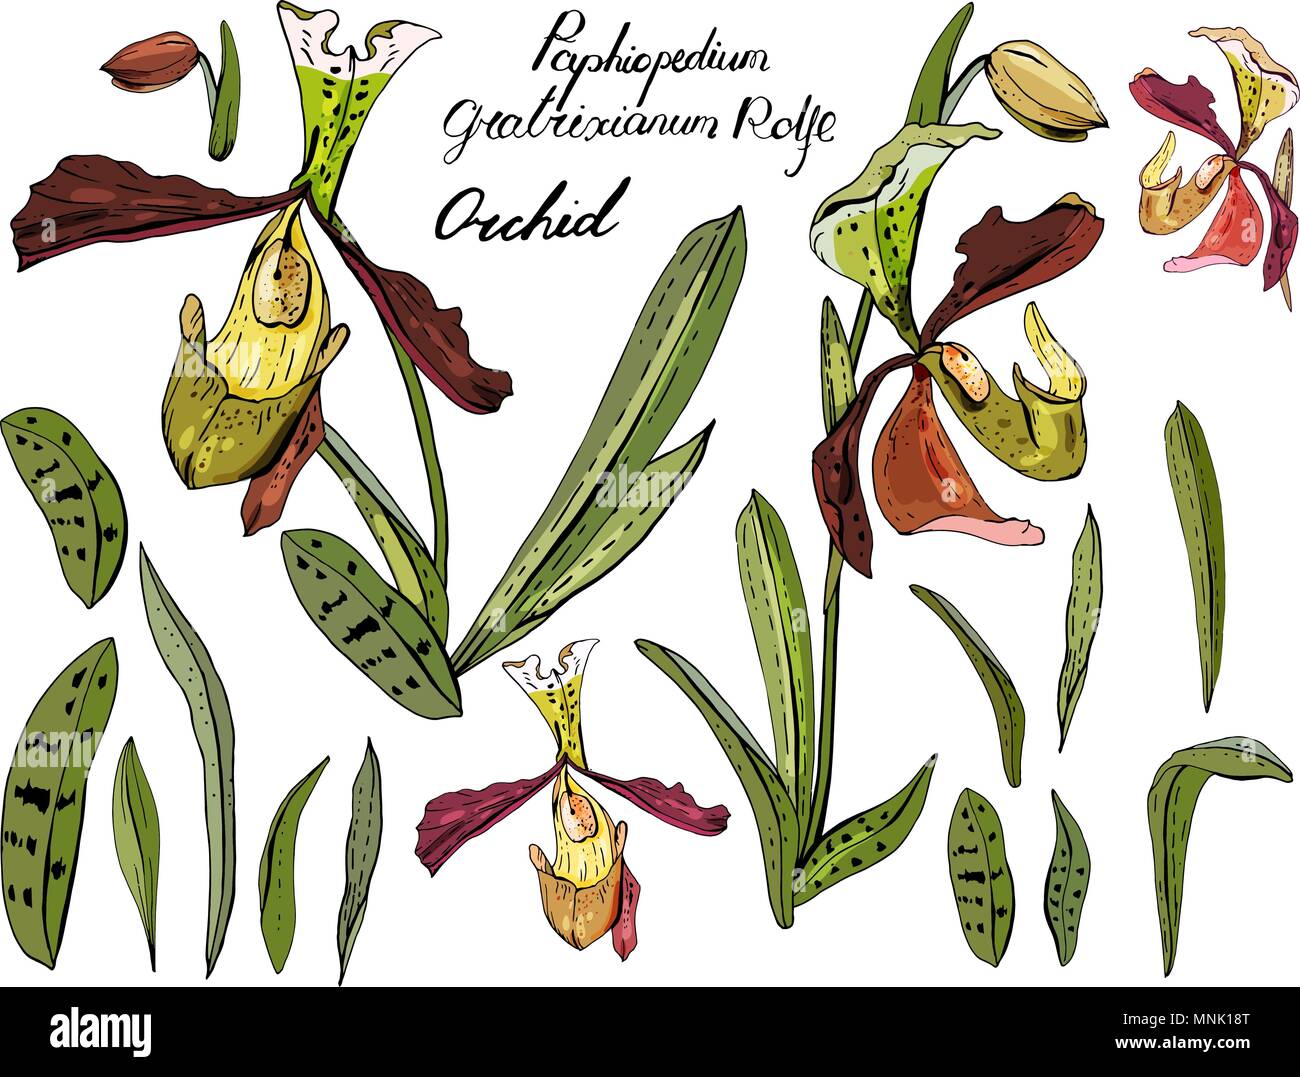 Isolato orchid paphiopedilum su bianco. Illustrazione Vettoriale